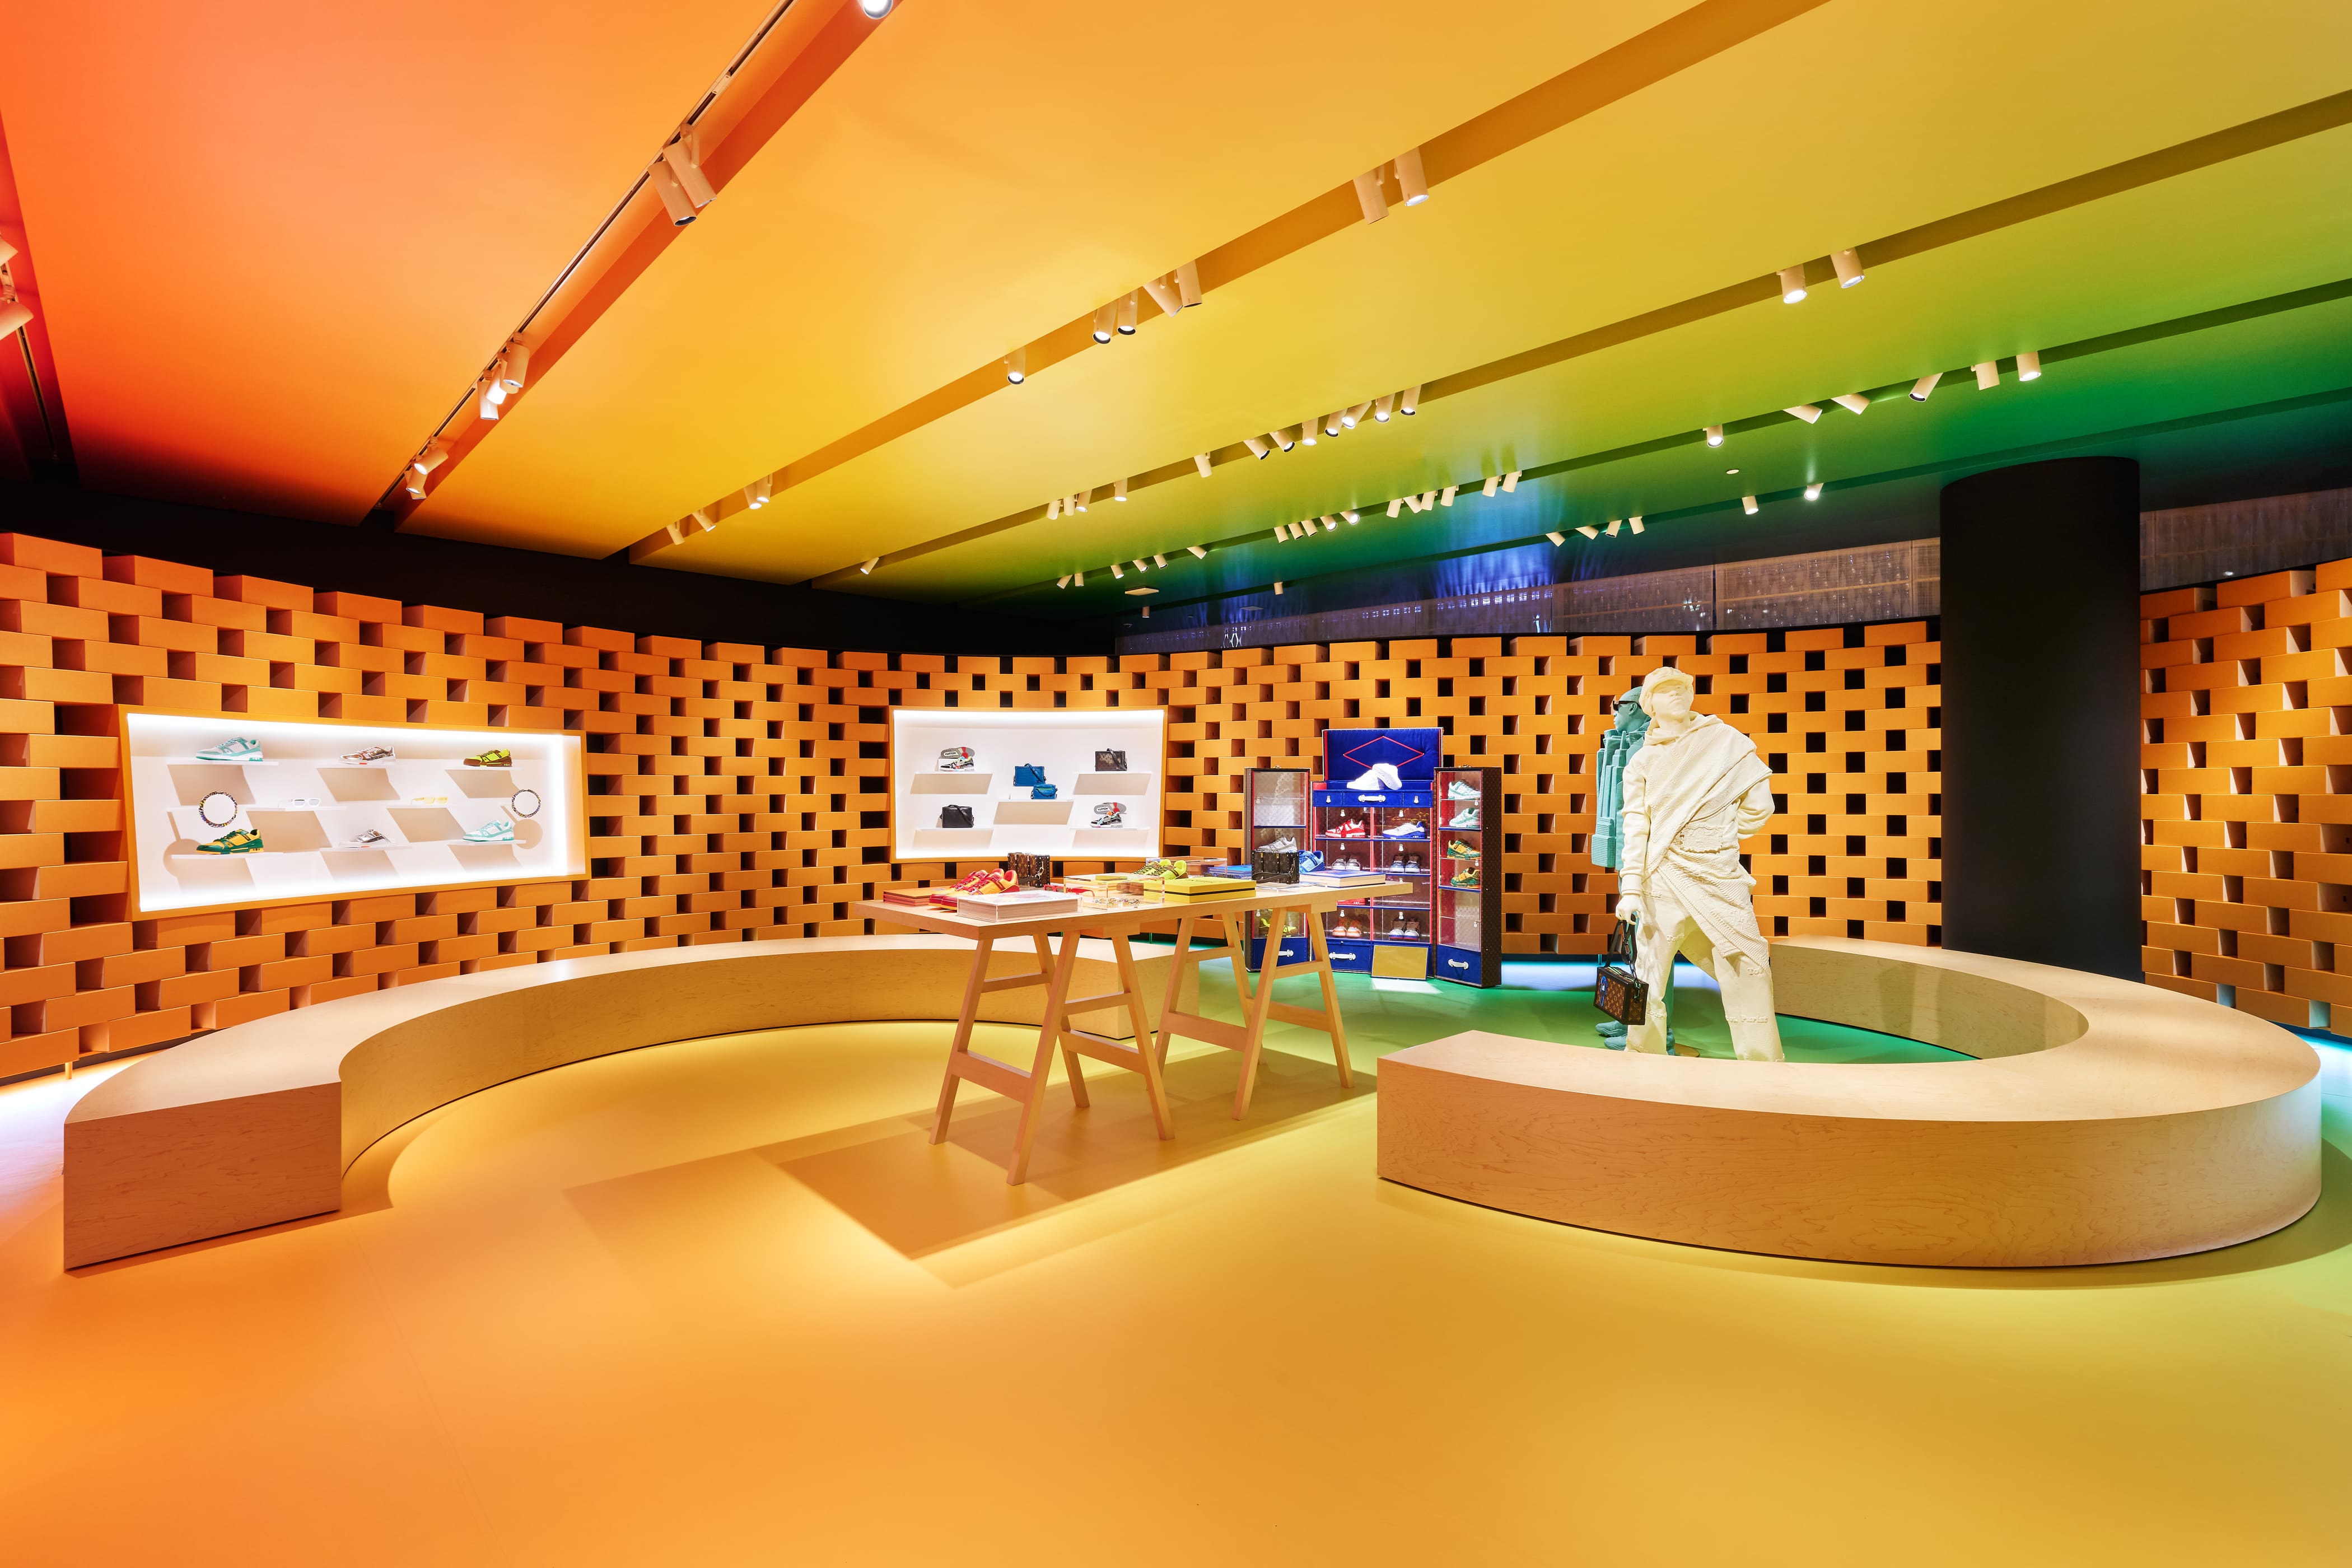 Louis Vuitton pop-up store, Tokyo – Japan